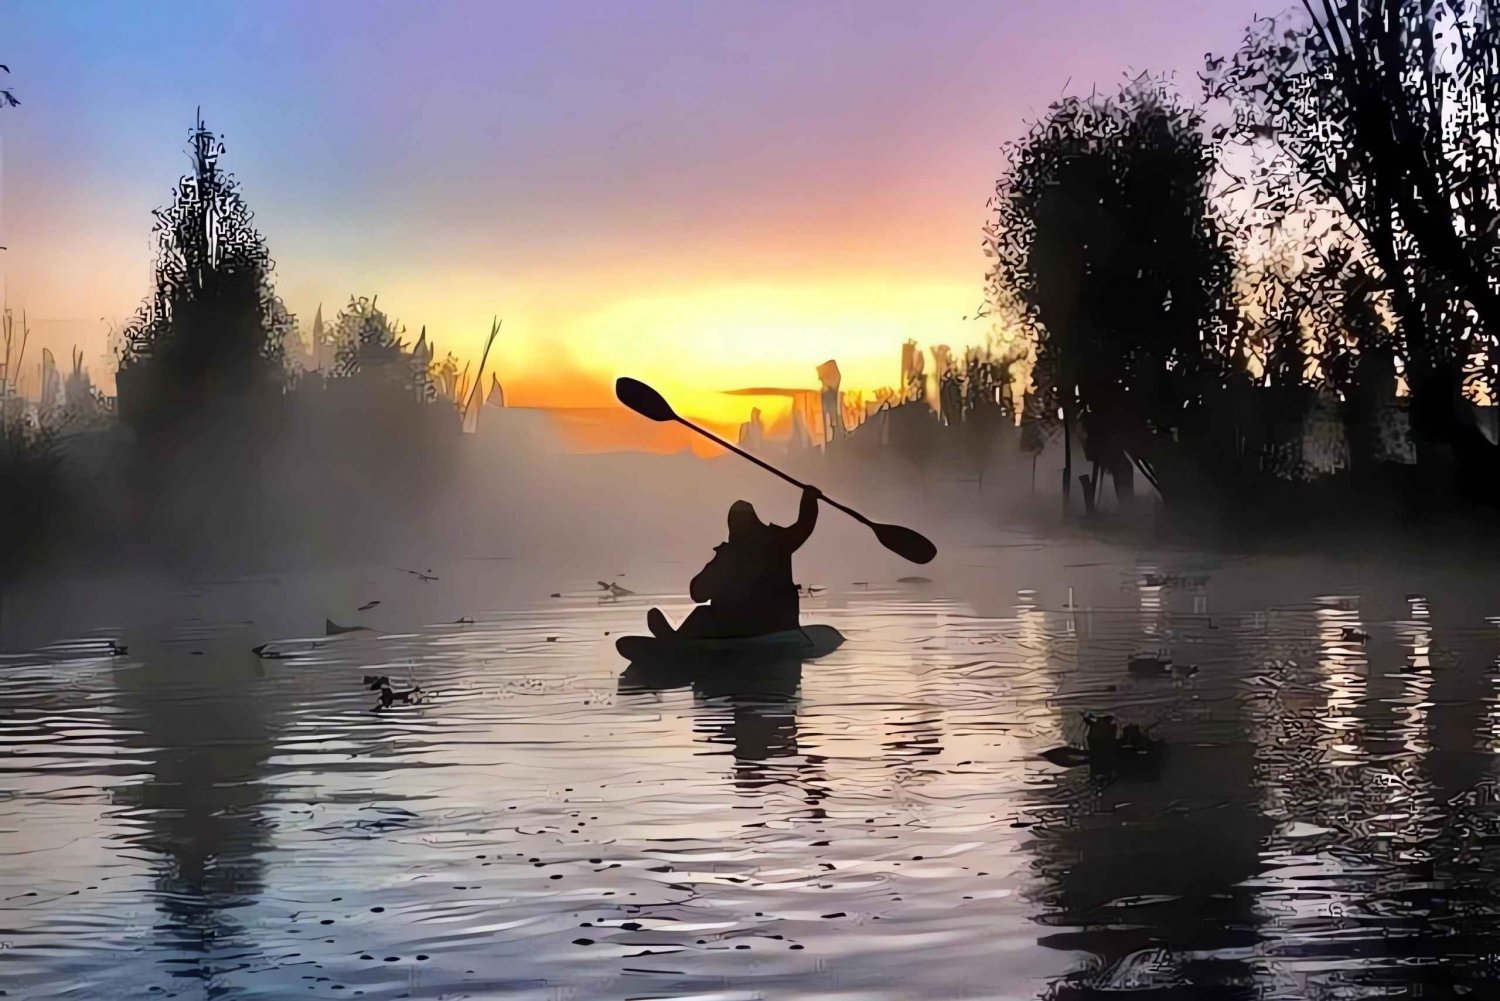 Xochimilco: kayak ride on the lake